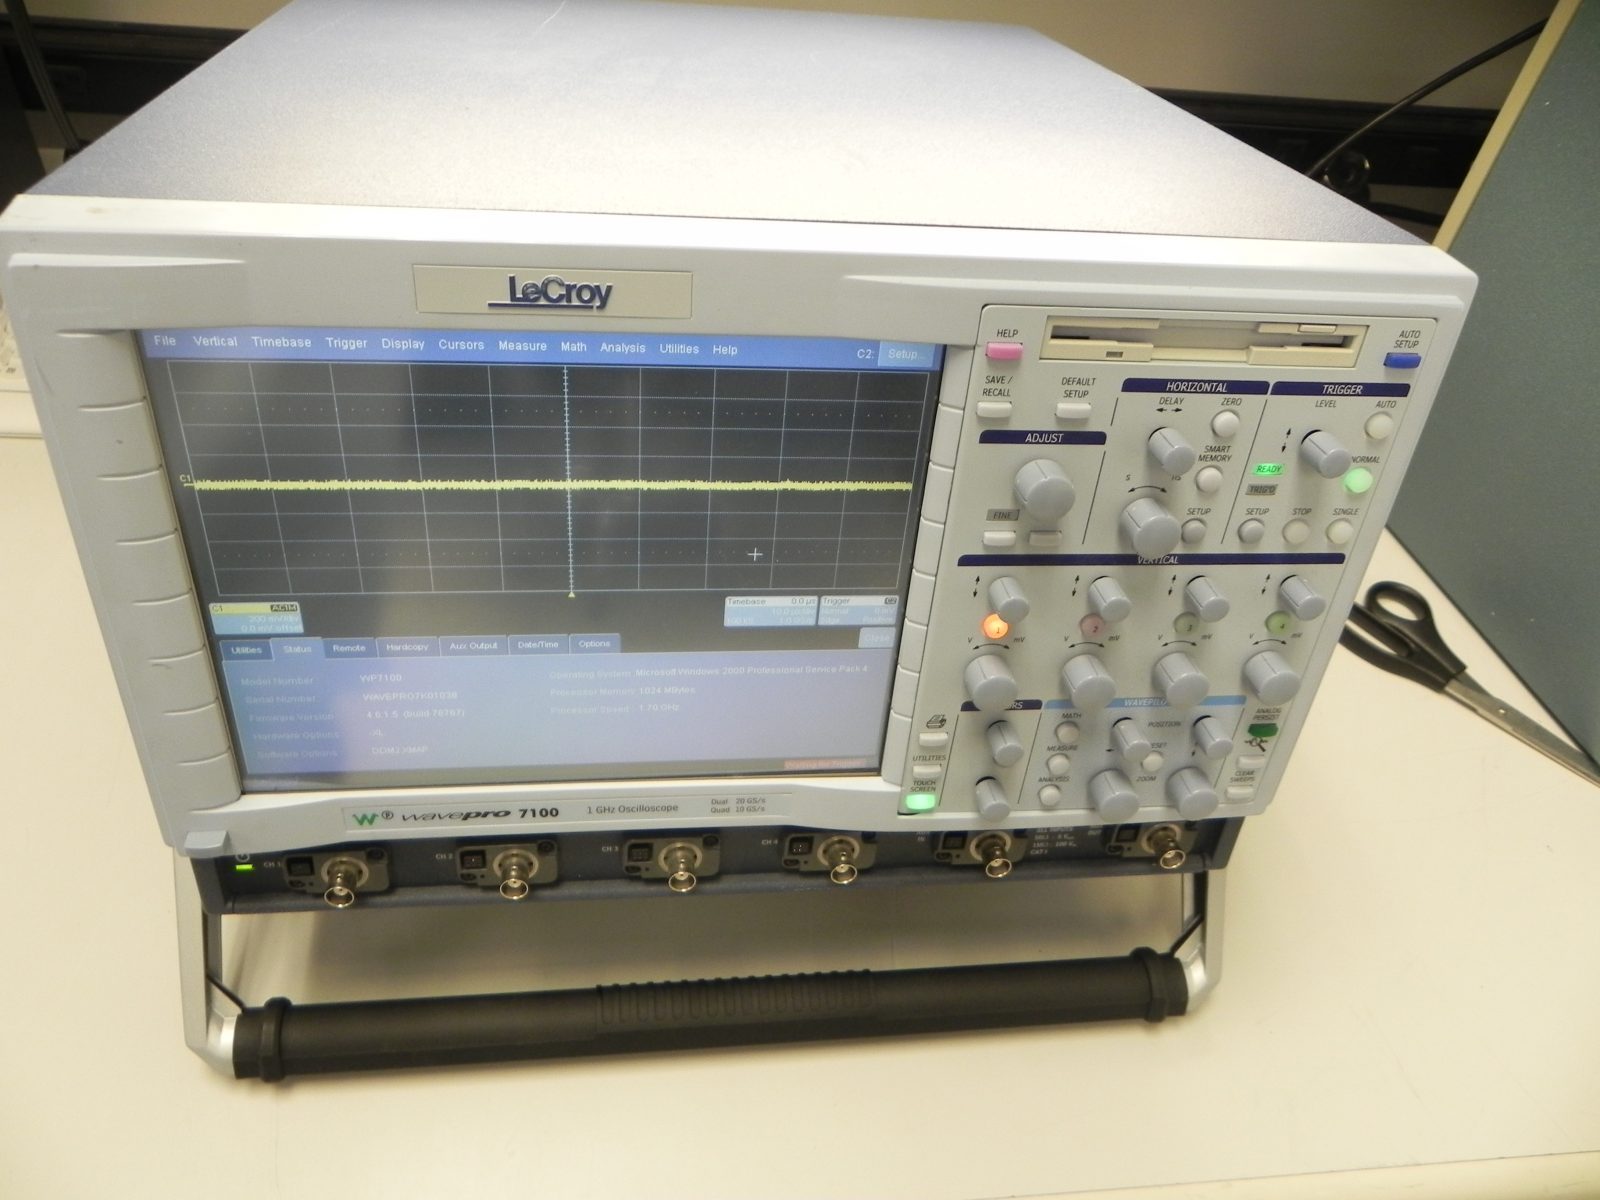 LeCroy WavePro 7100 Oscilloscope, 4-Channel, 1 GHz with XL/DDM2/XMAP